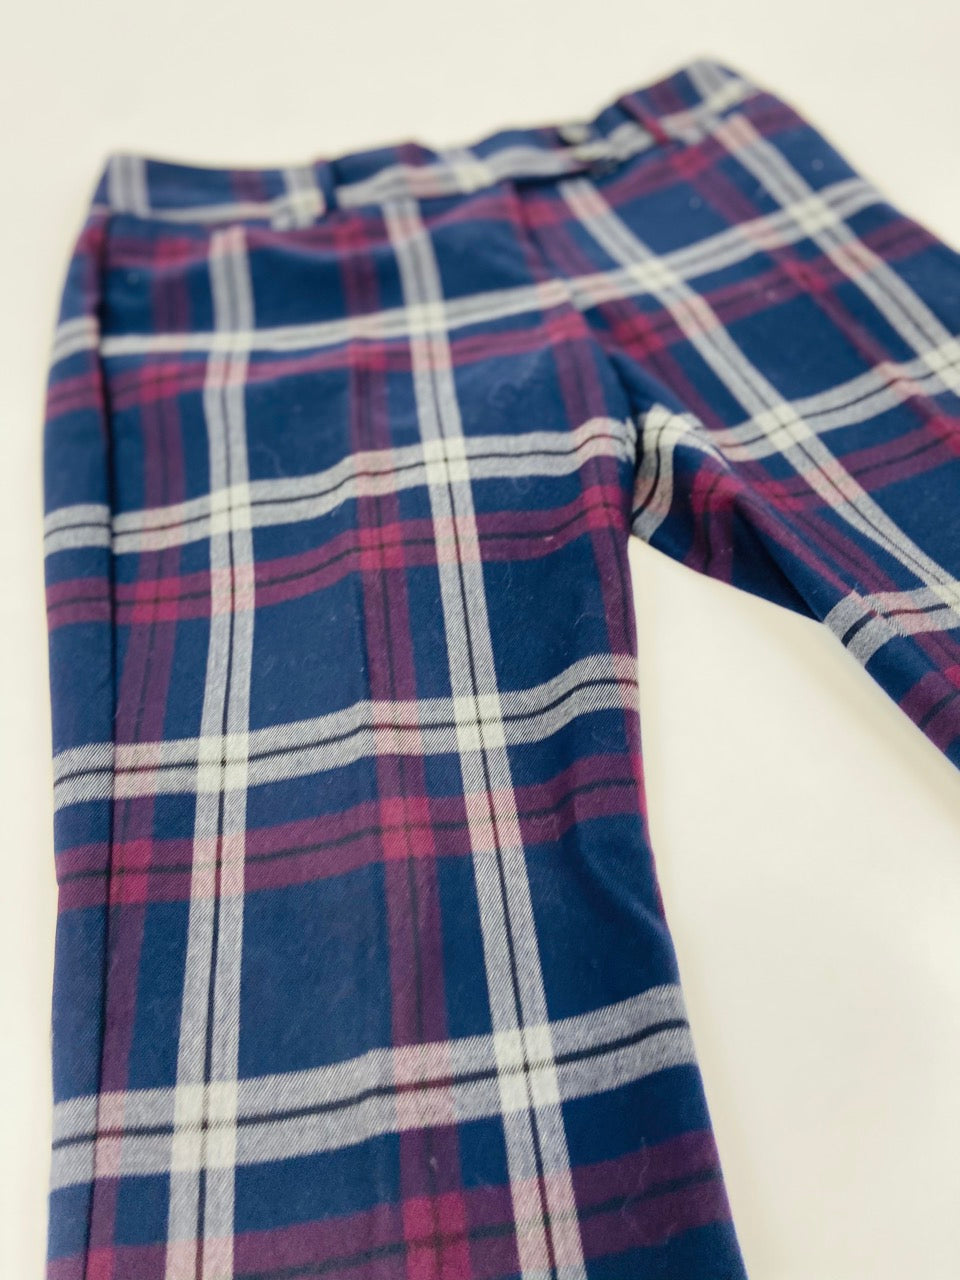 Flannel Patterned Dress Pants (Drew Fit)- 6 Regular